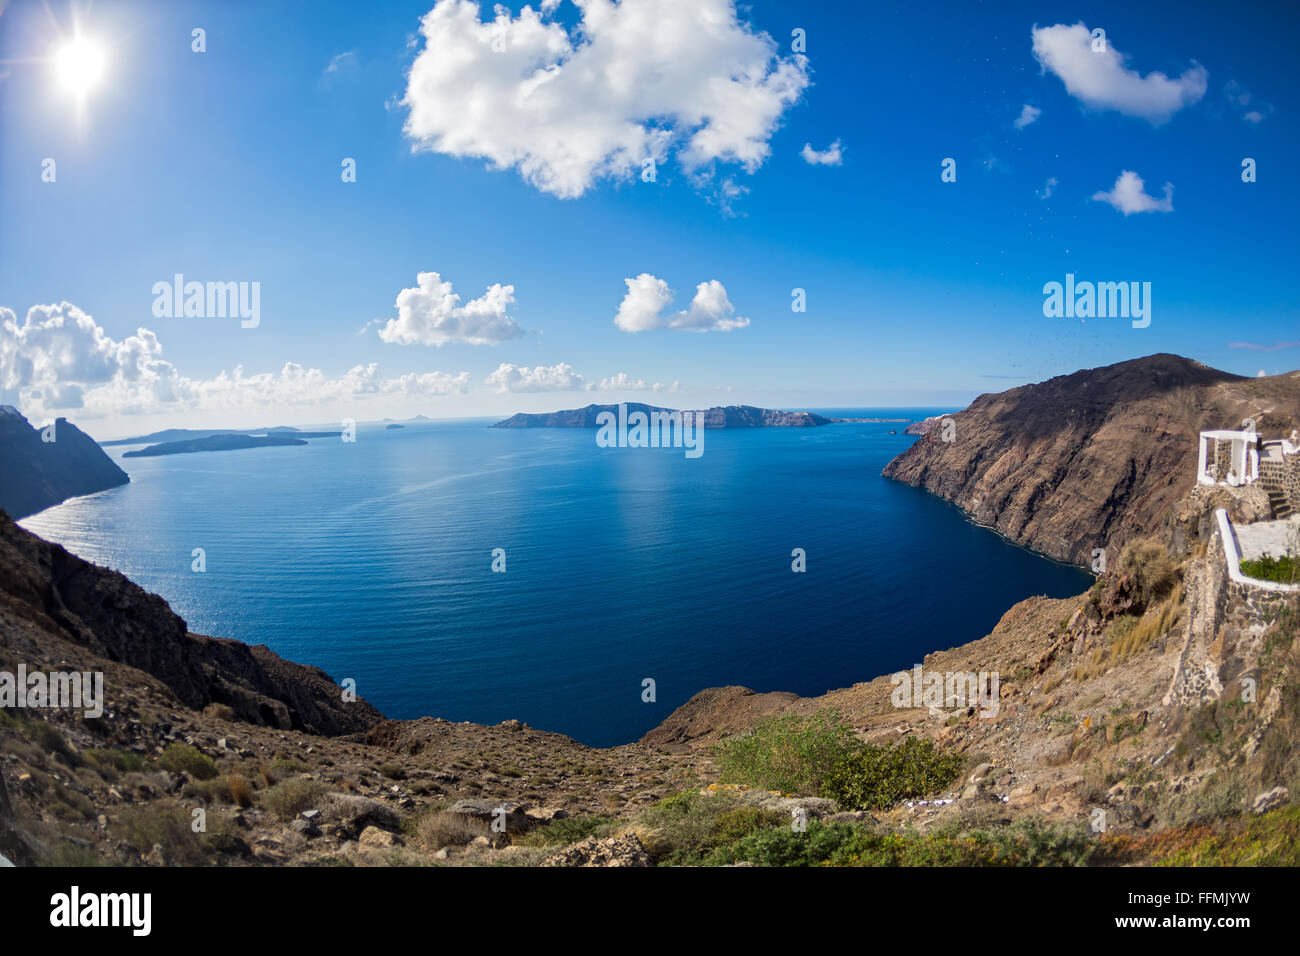 Beautiful Bay on the island of Santorini, Greece Stock Photo